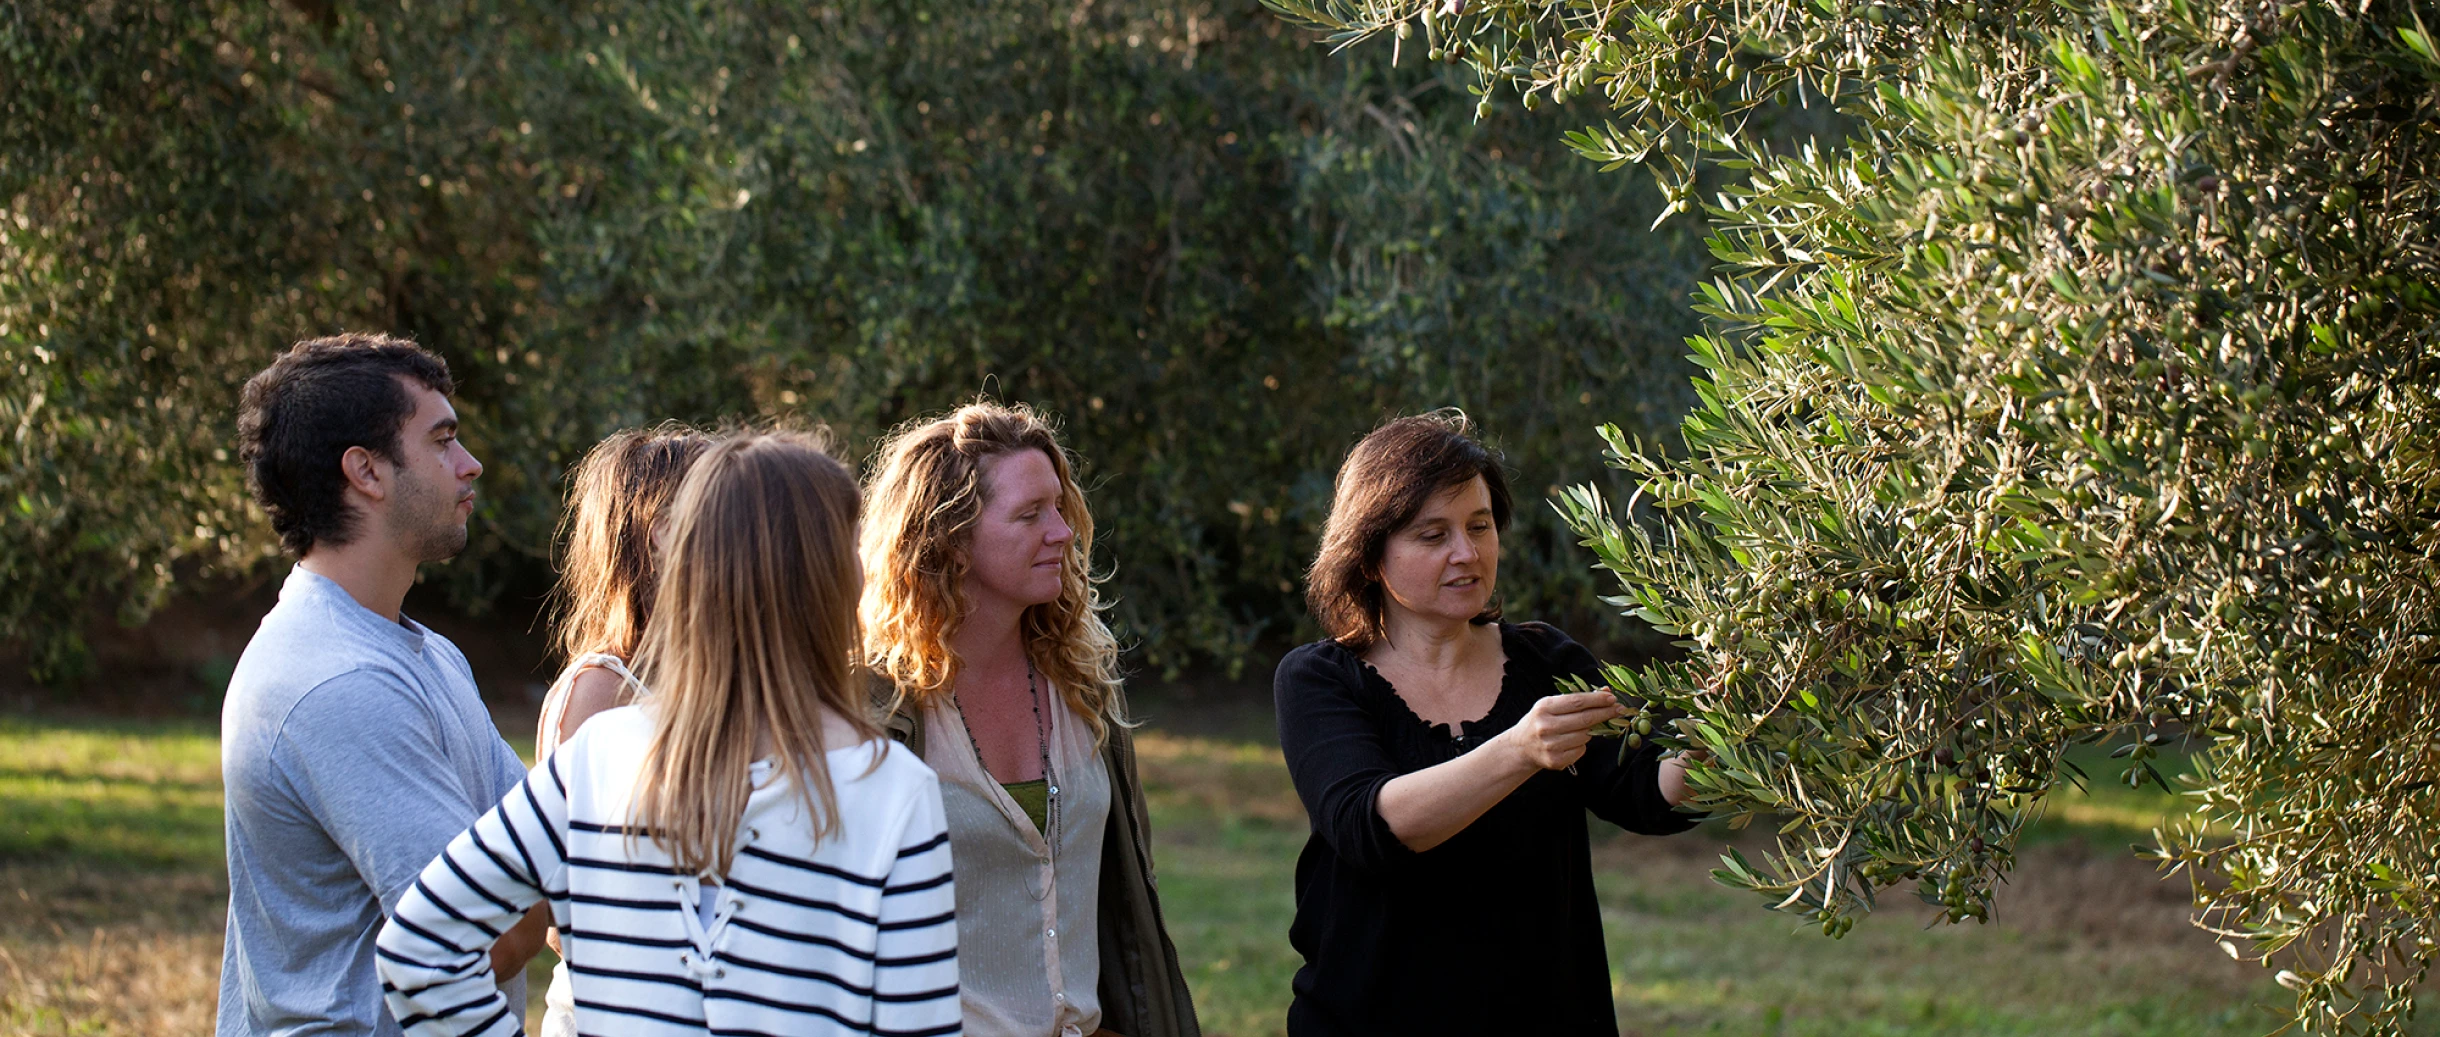 A promenate through the olive oil fields slide 0